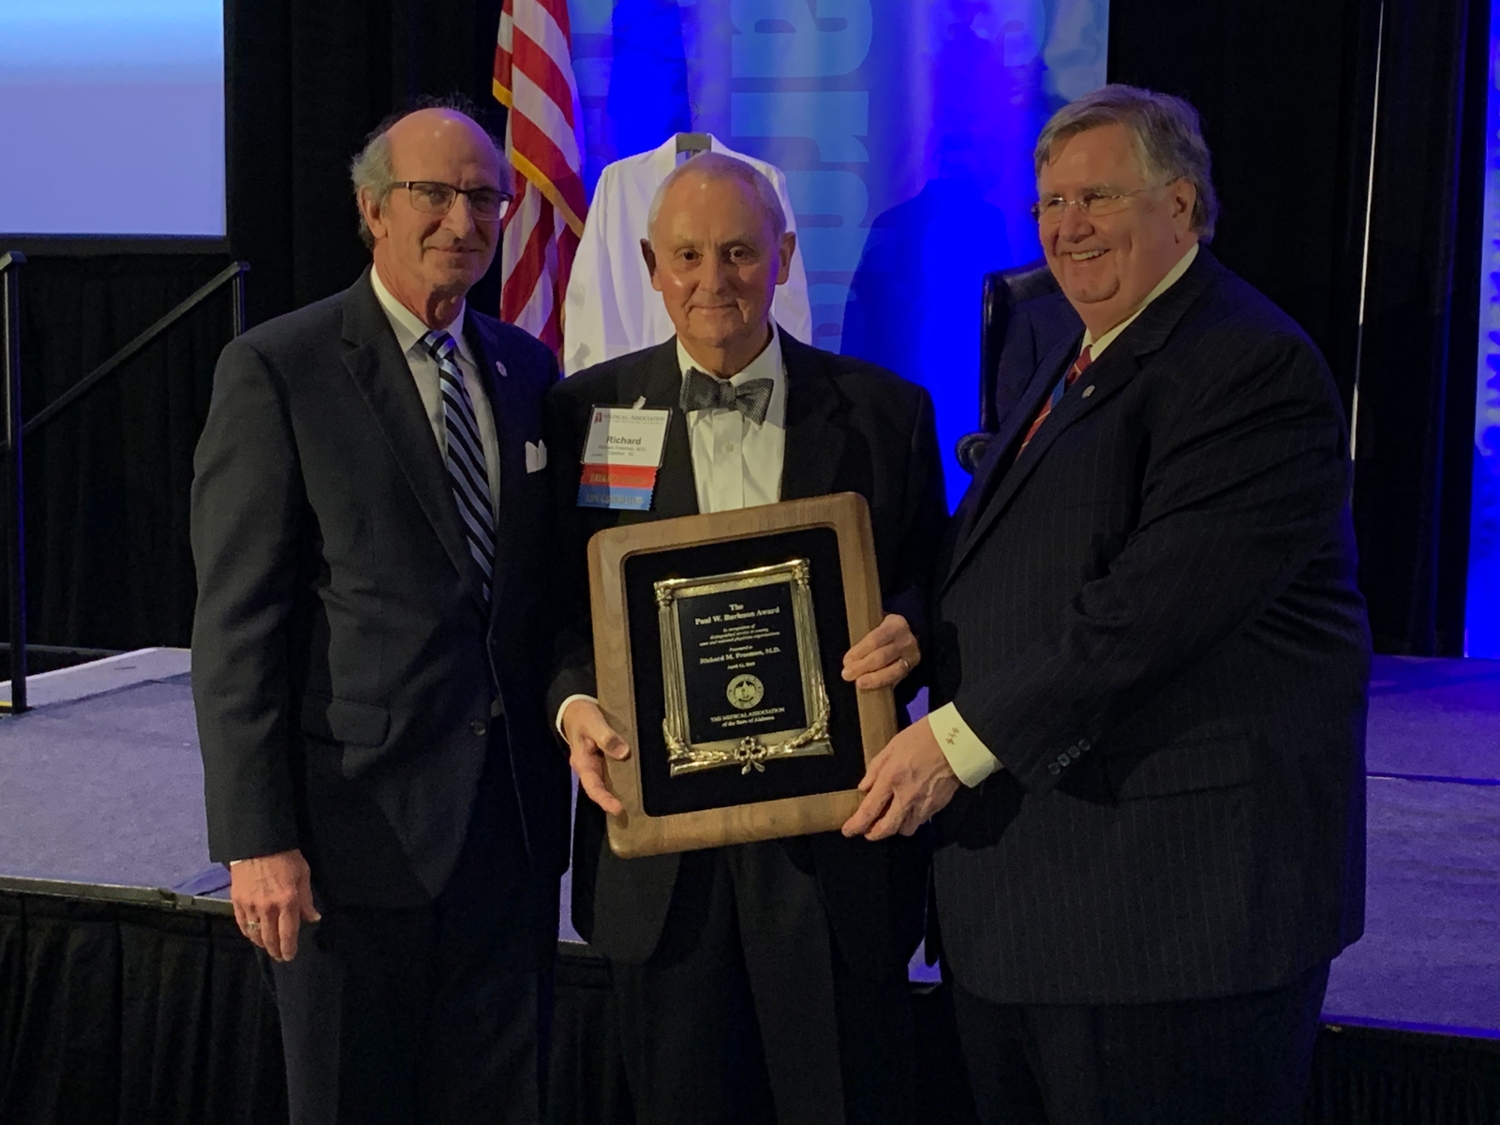 Richard M. Freeman, M.D. (middle) receives an award.